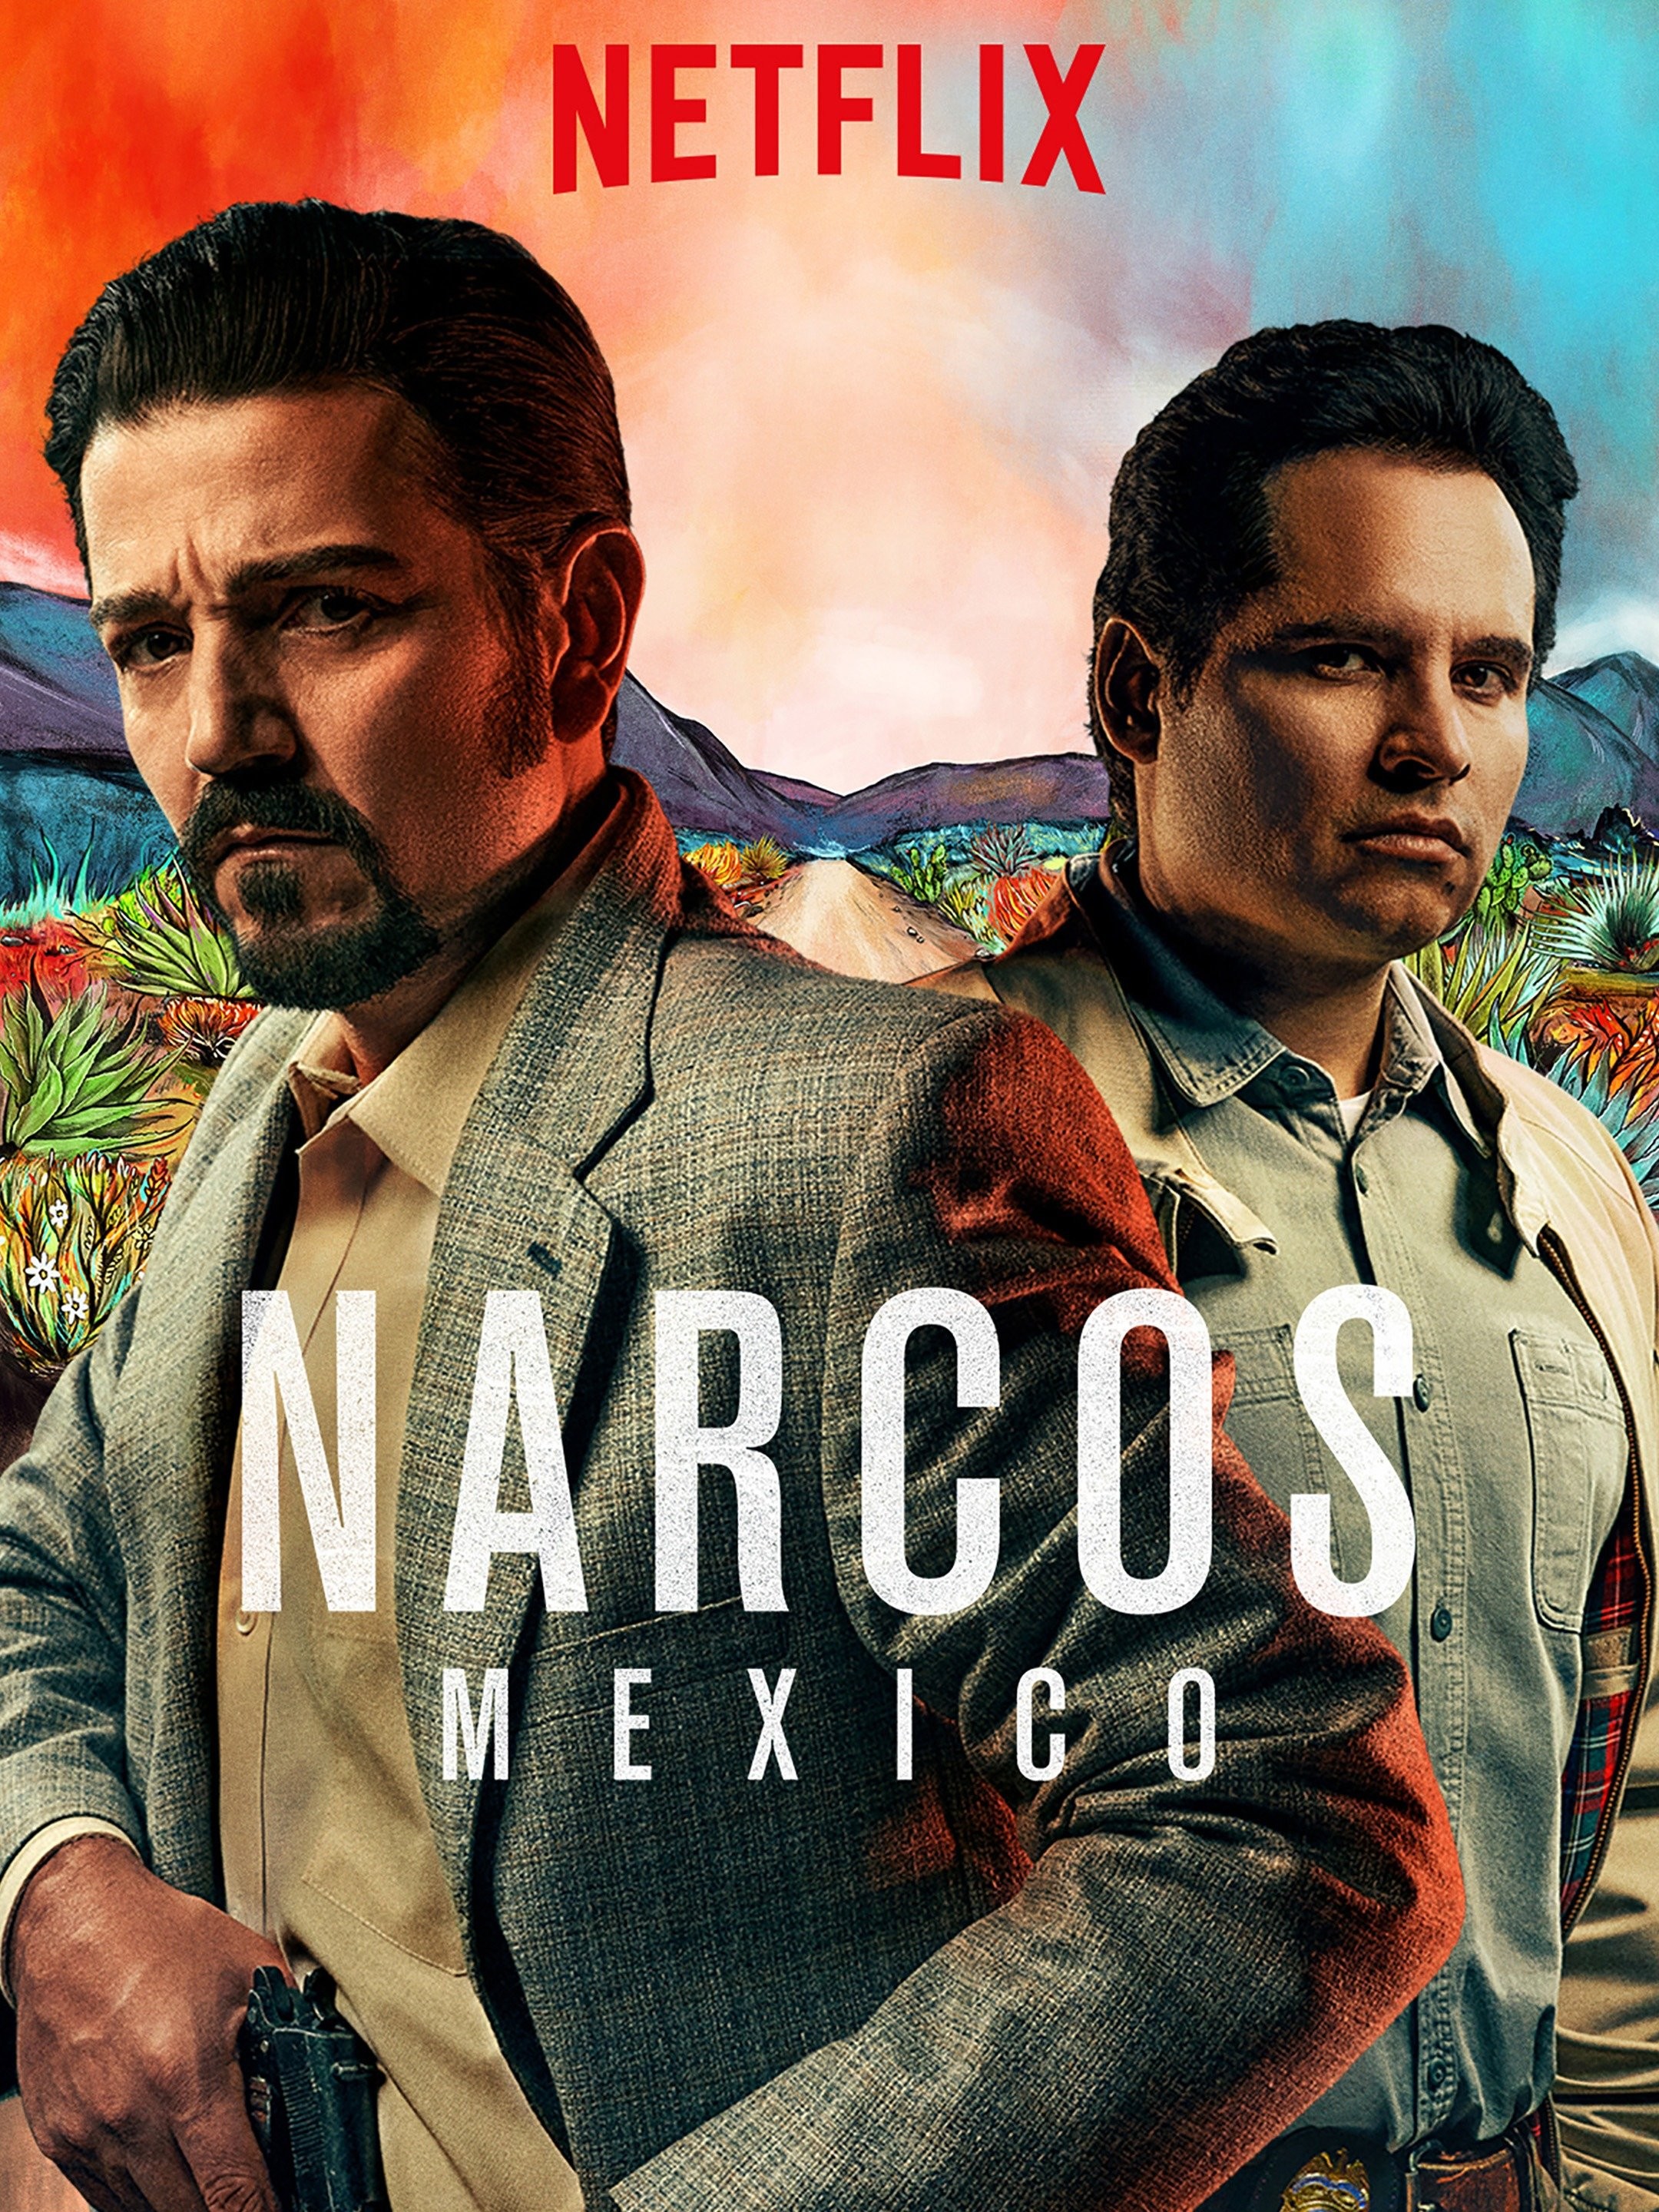 Narcos' Season 3 Trailer: WATCH